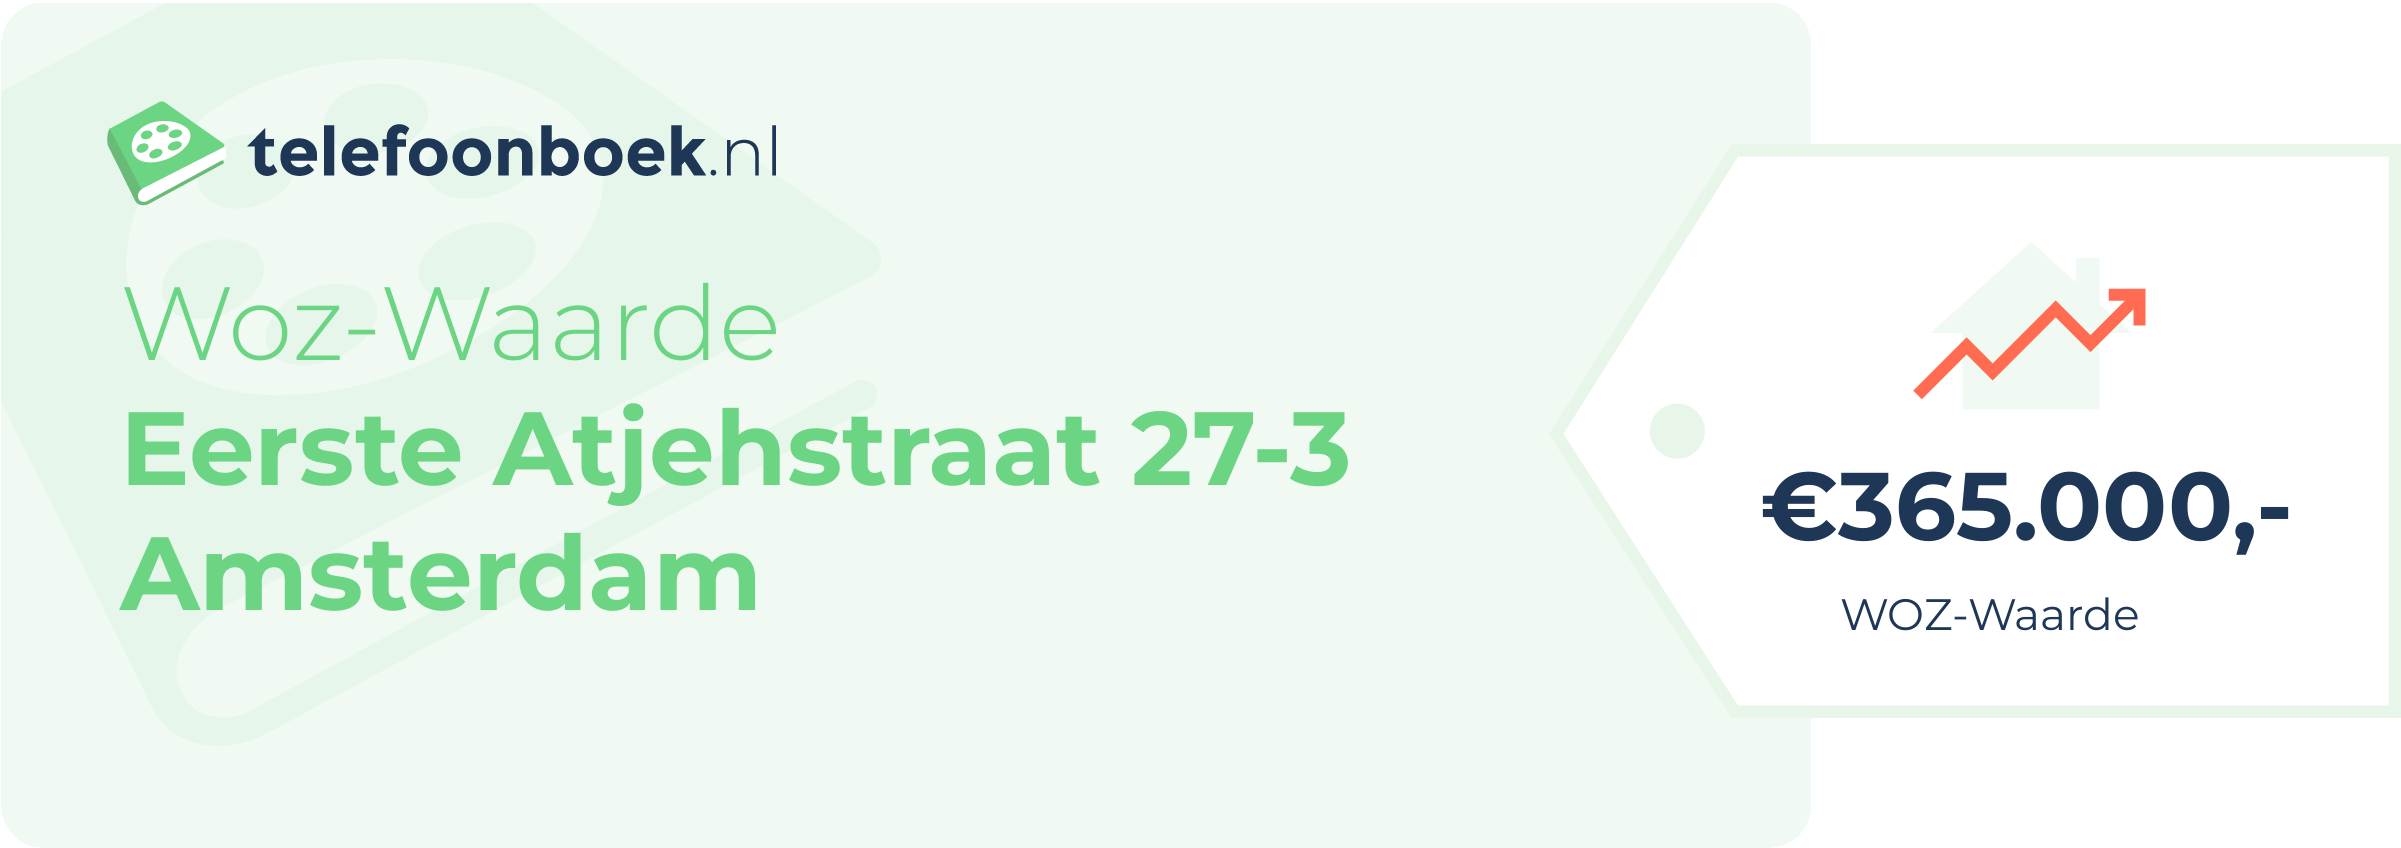 WOZ-waarde Eerste Atjehstraat 27-3 Amsterdam